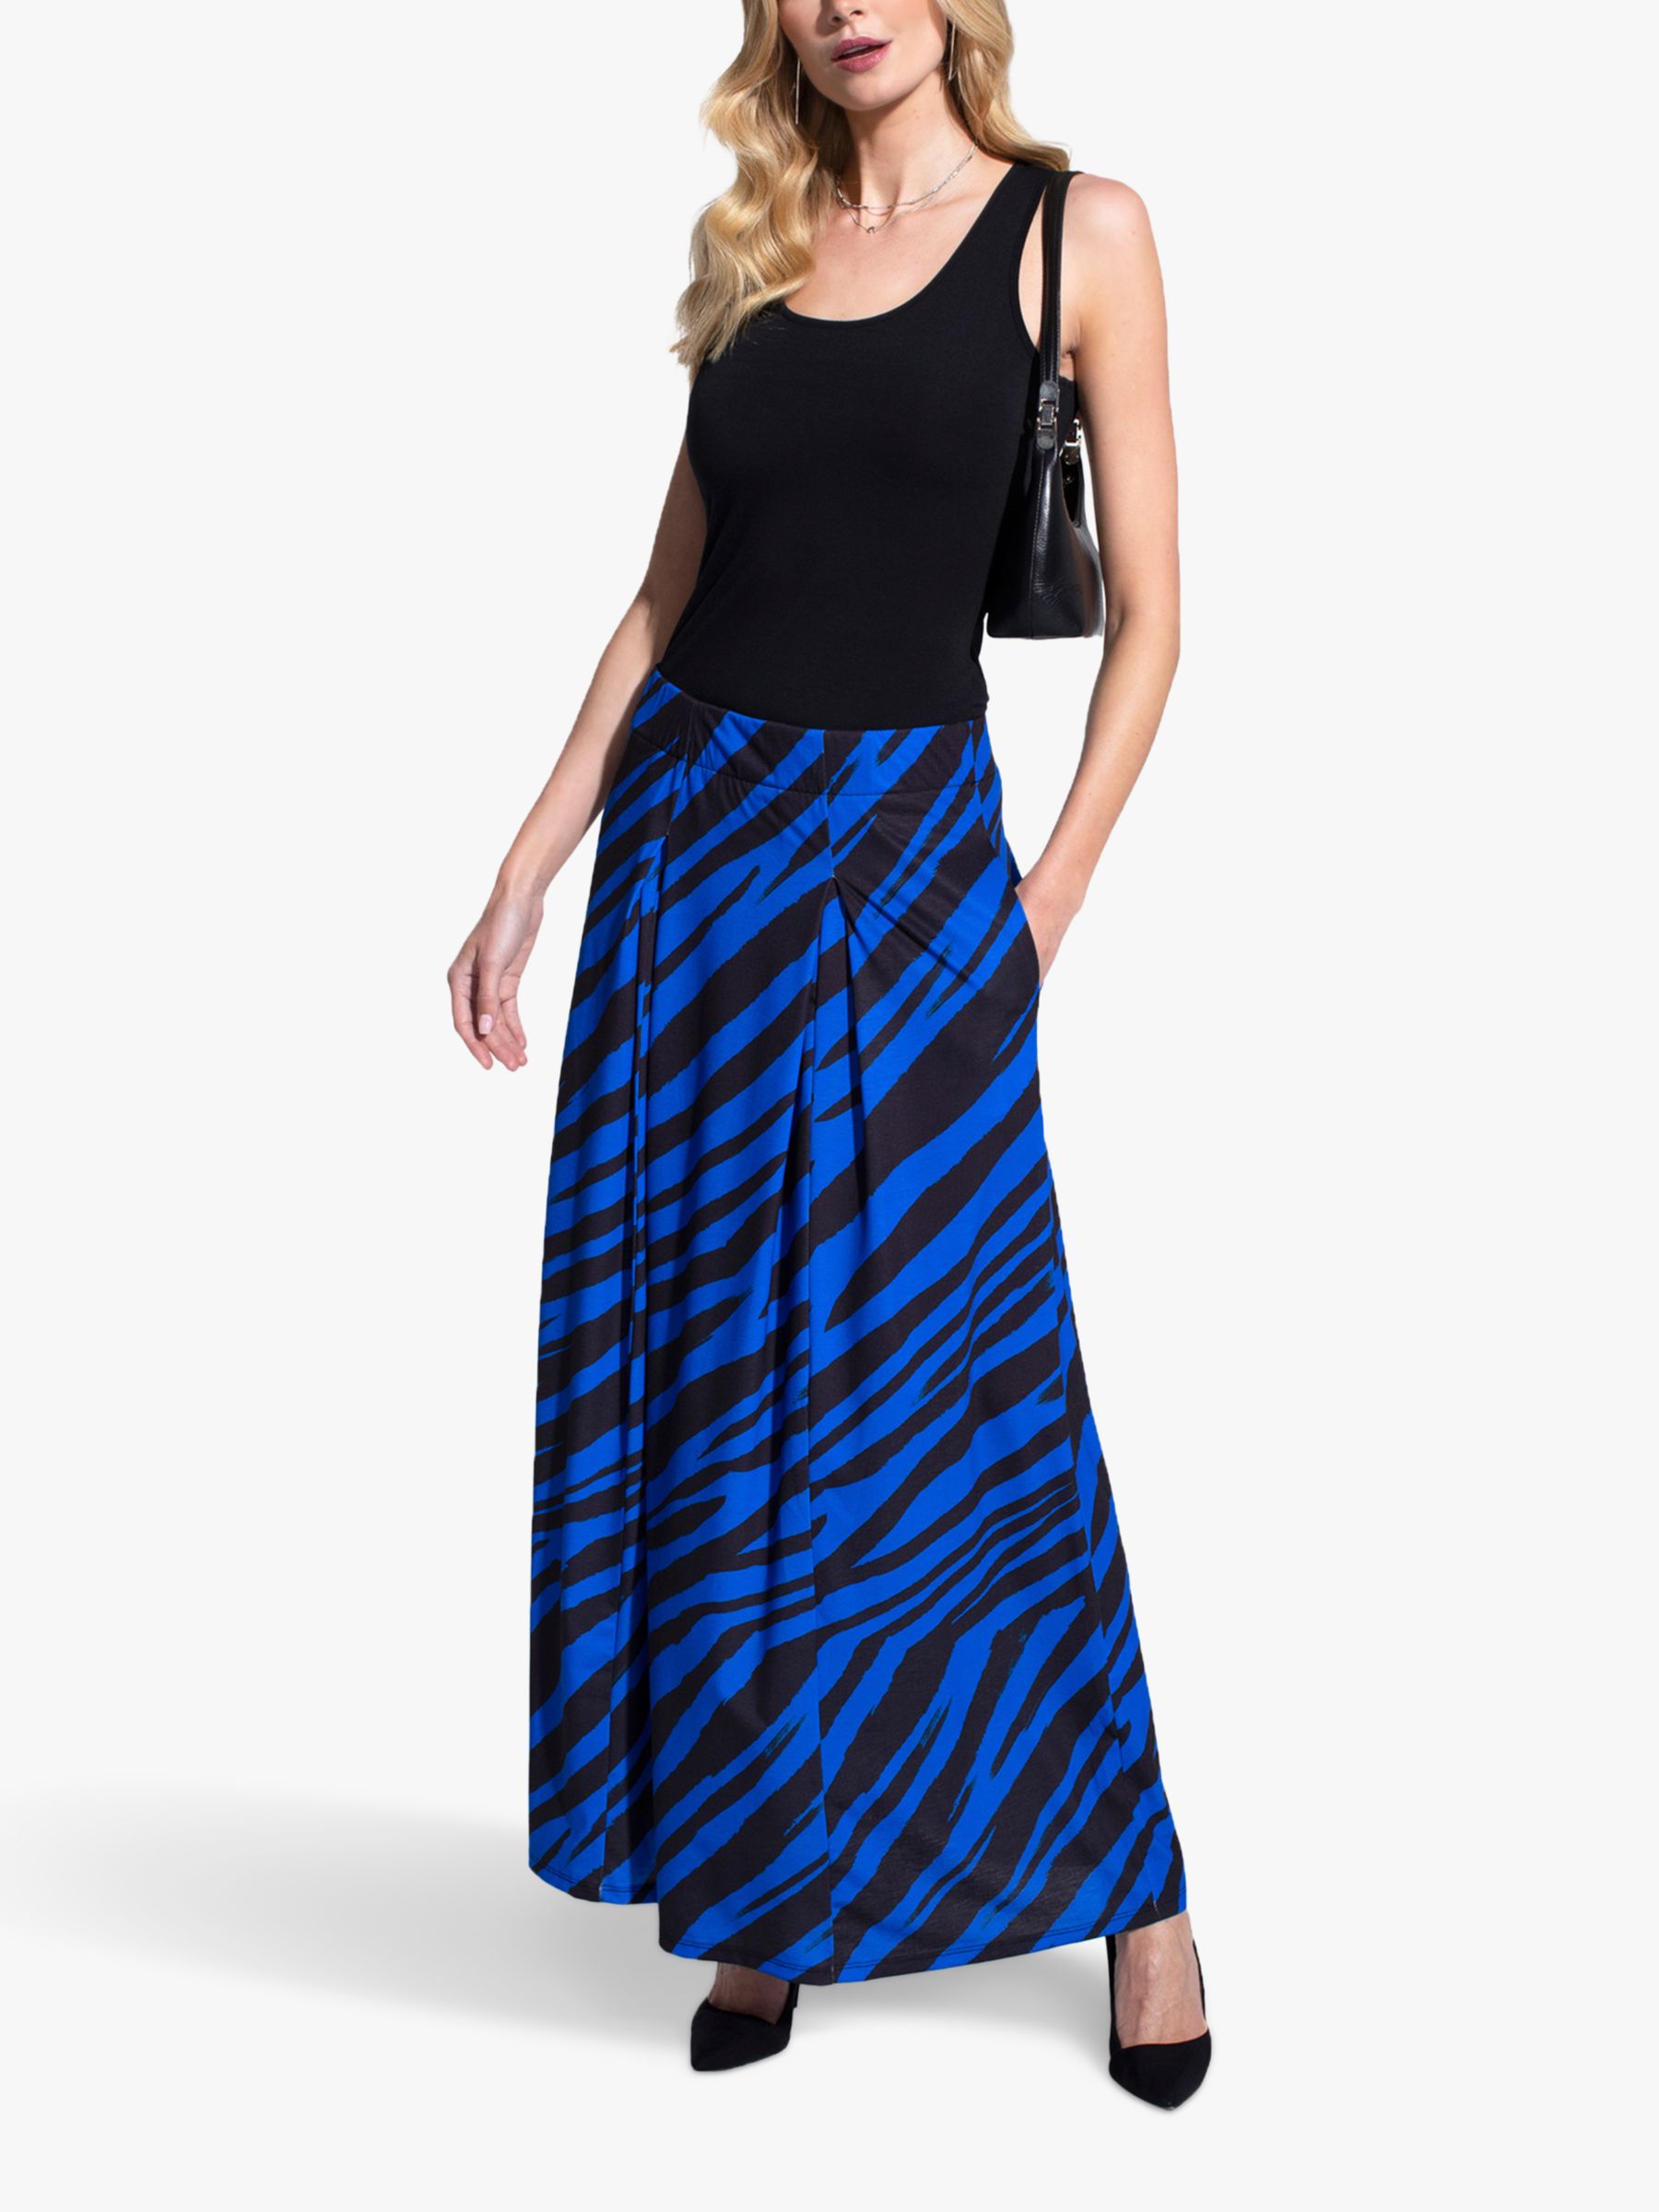 HotSquash Animal Box Pleat Maxi Skirt, Bright Blue/Black, 8